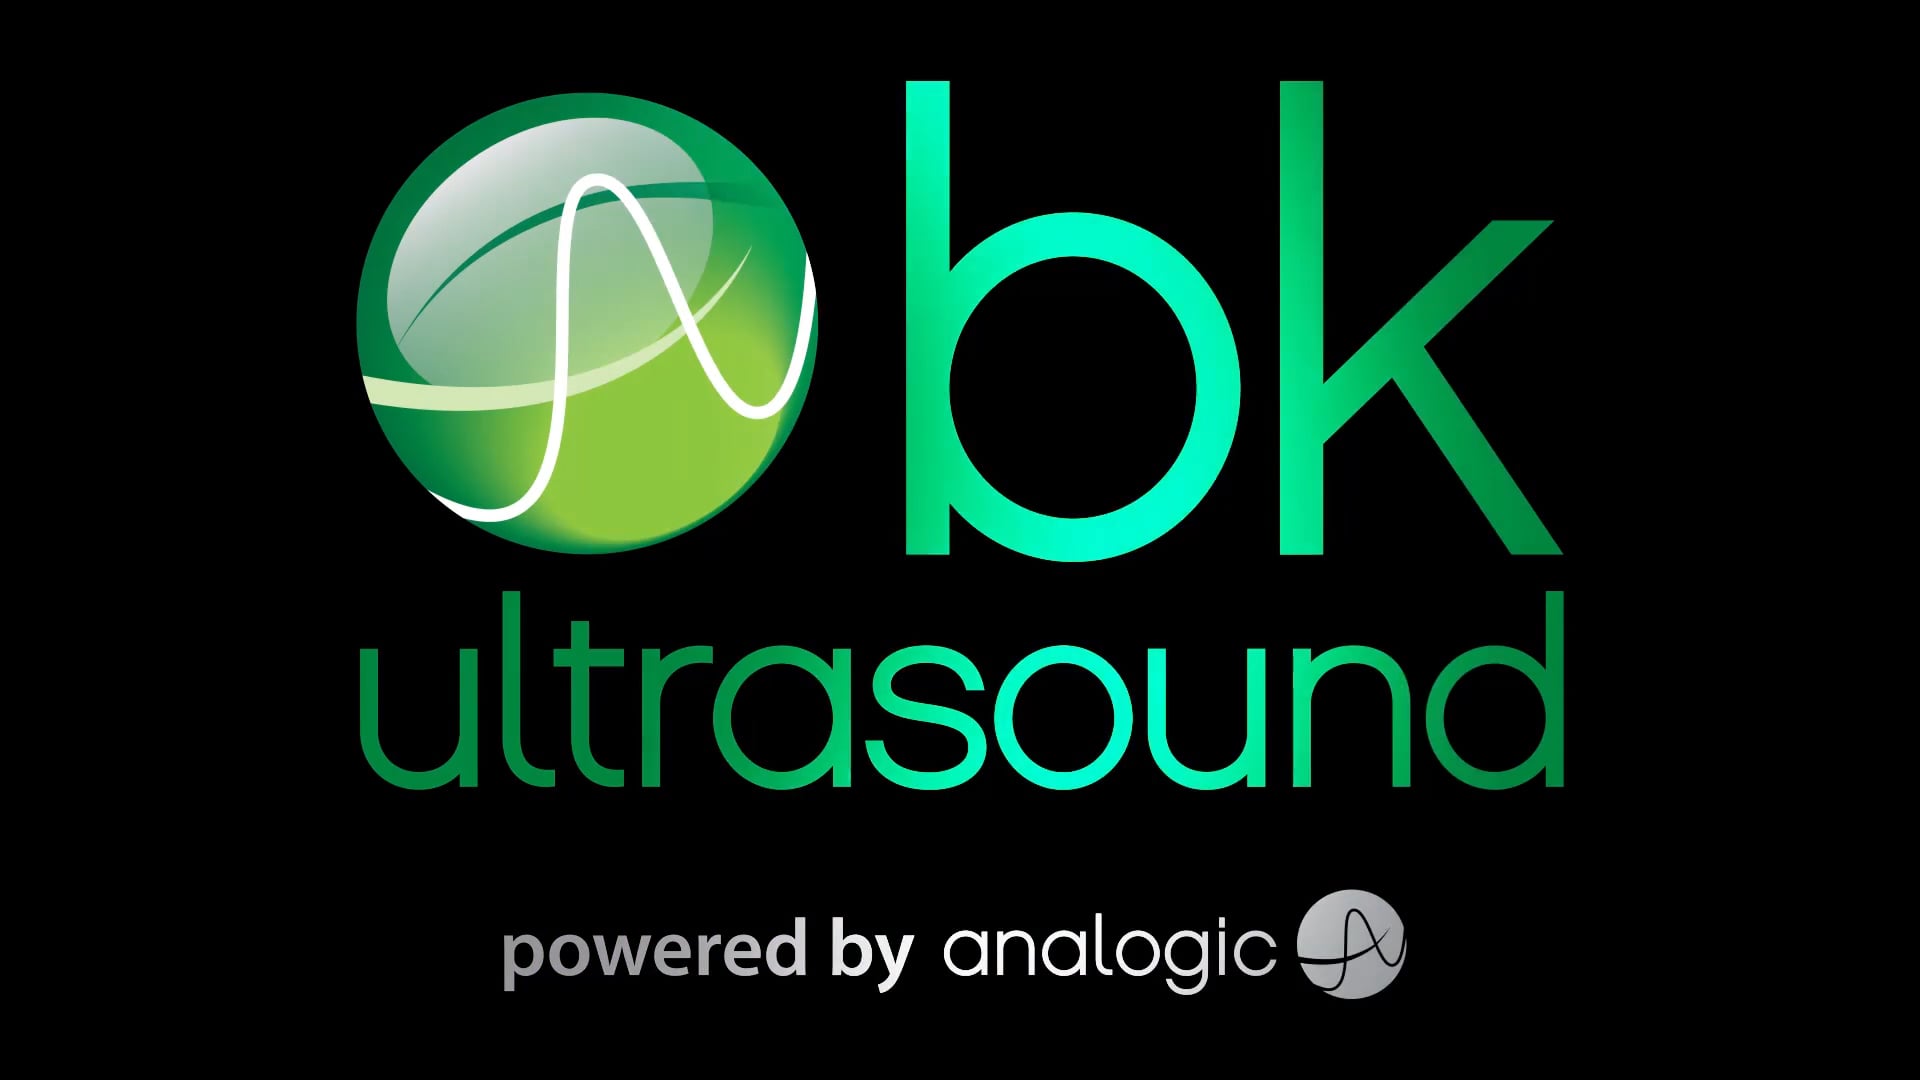 BK Ultrasound - Powered by Analogic